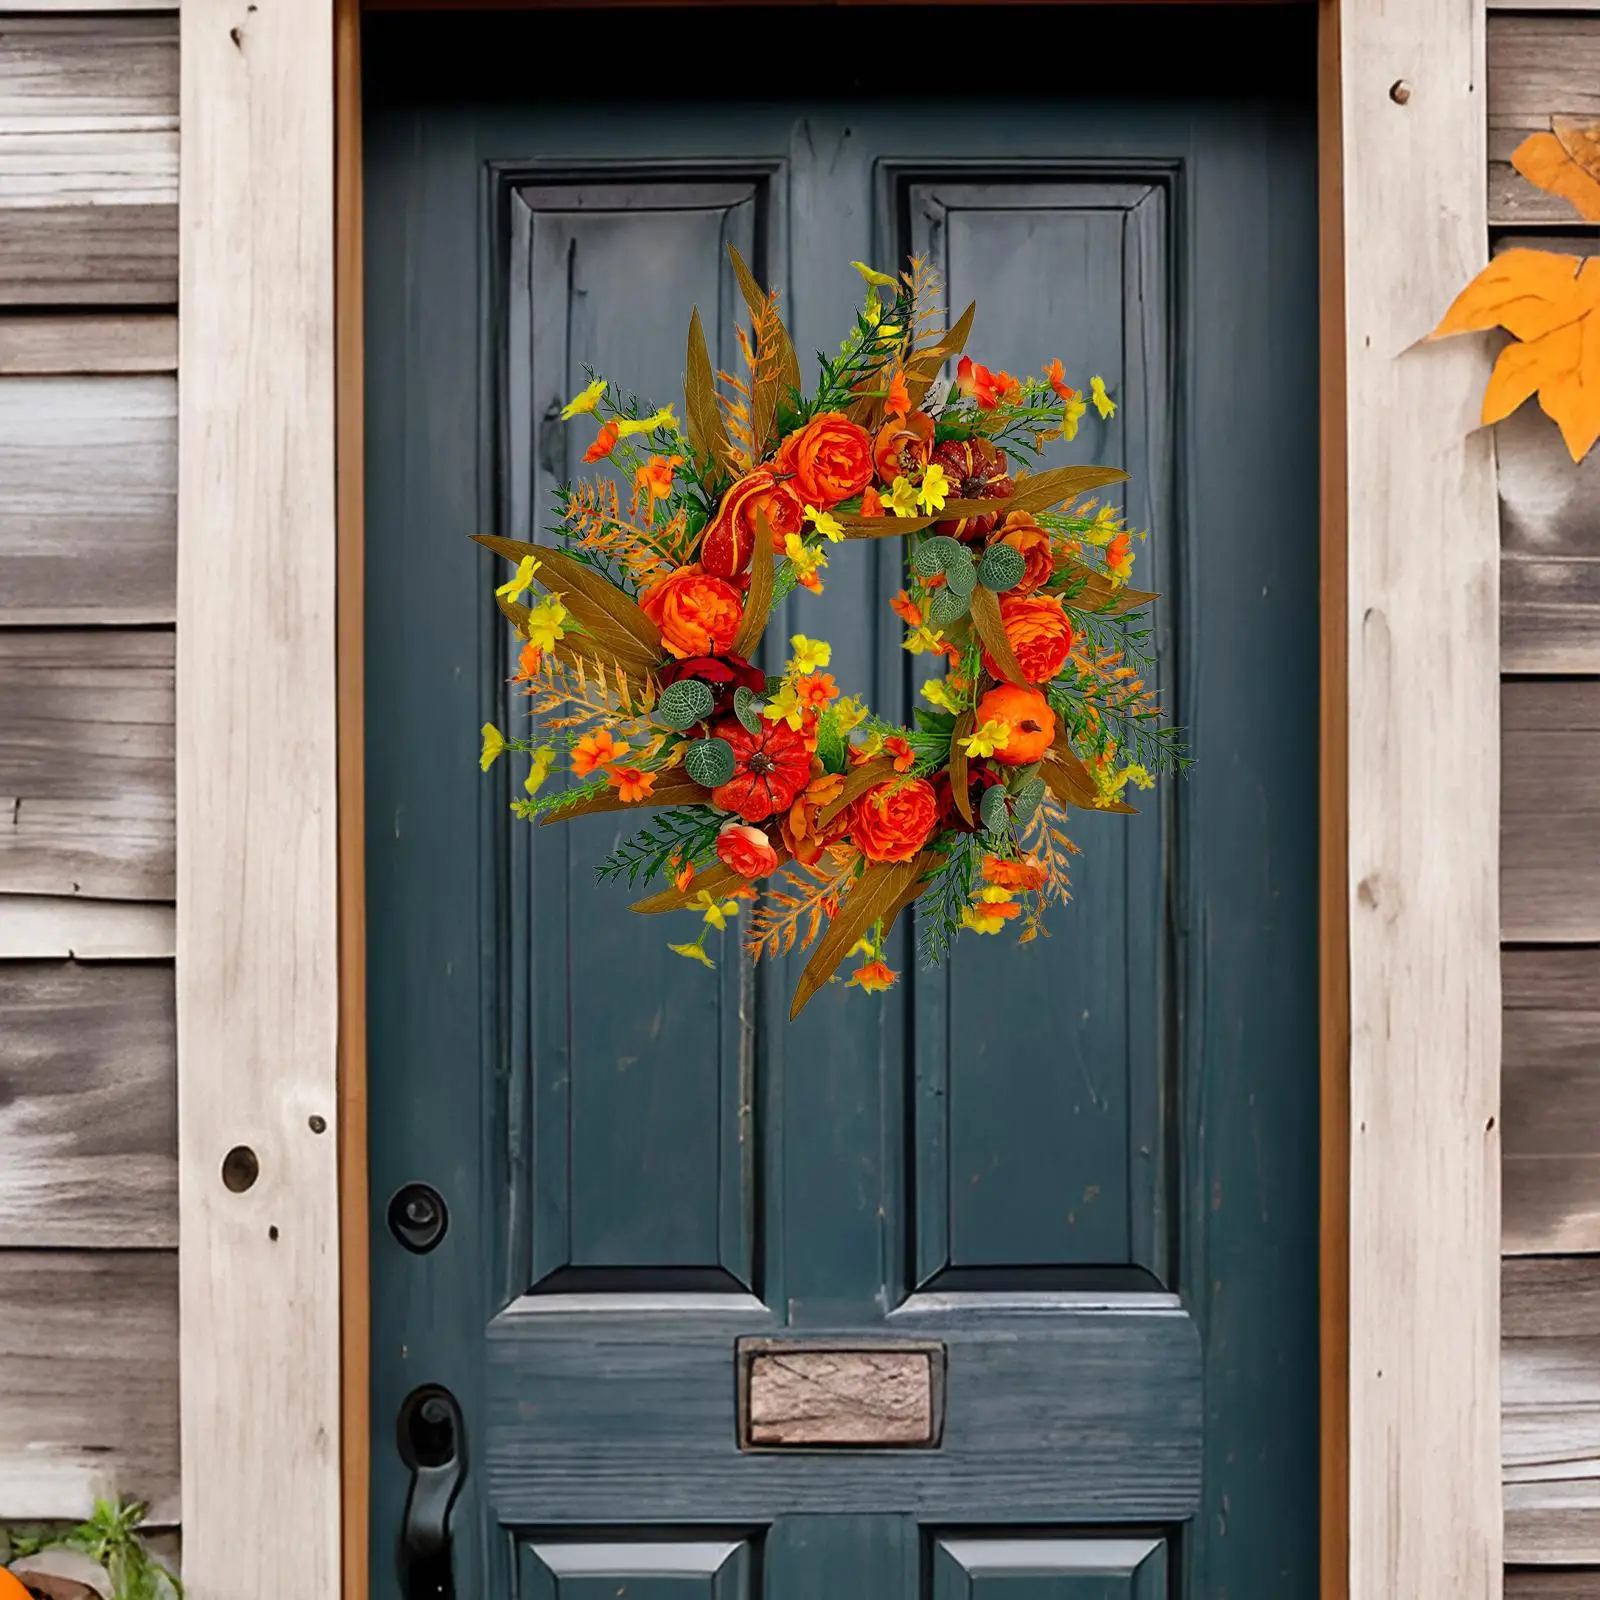 Fall Peony and Pumpkin Wreath 17.72`` Hanging Wall Decoration Fall Wreath Autumn Wreath for Festival Halloween Window Home Décor